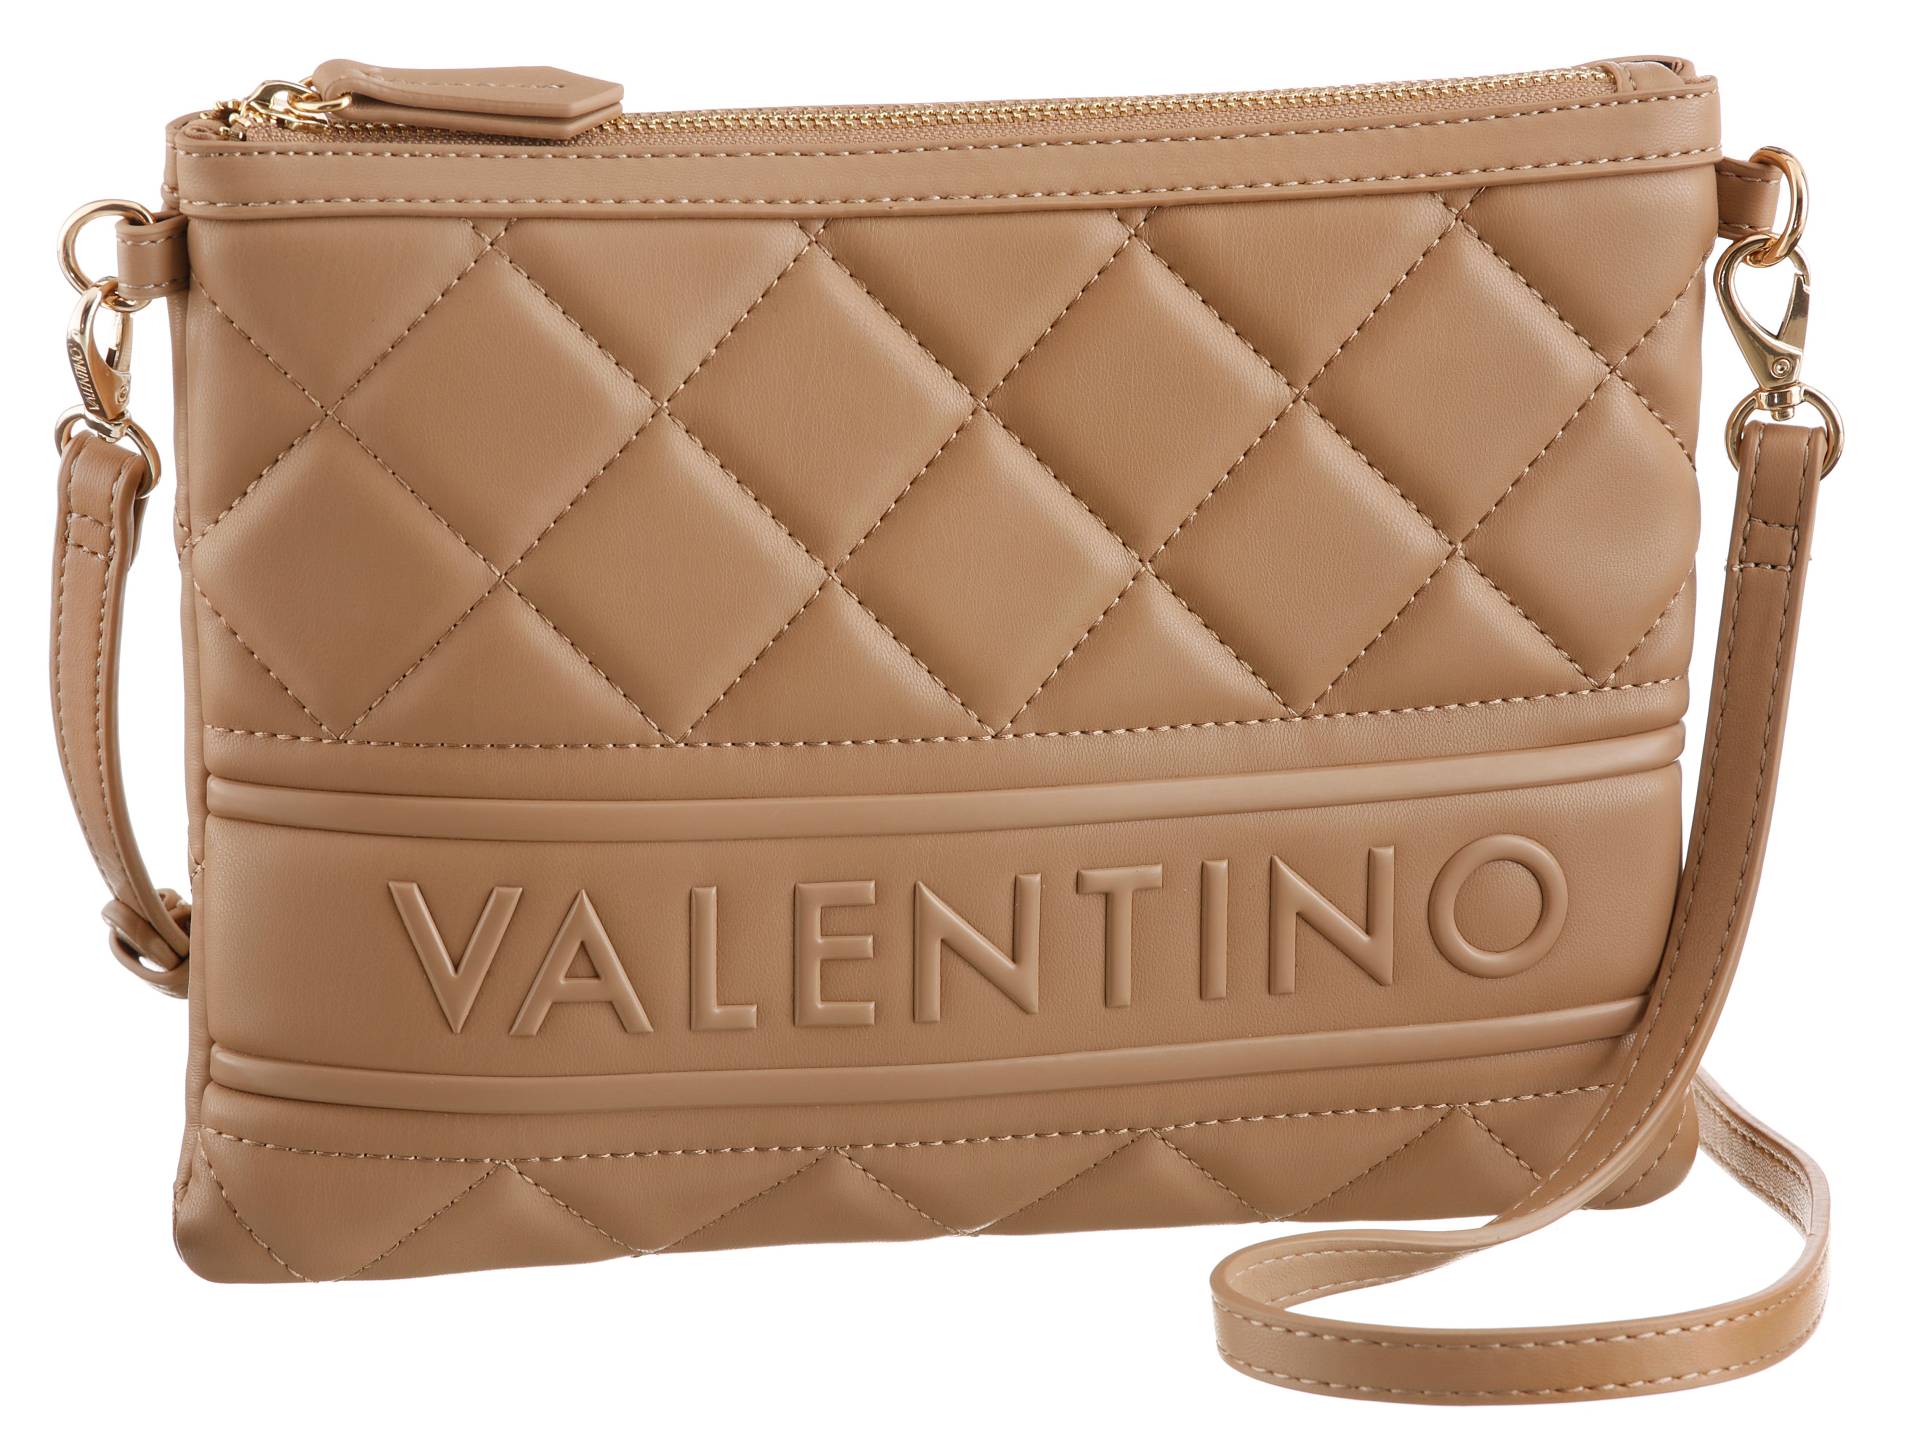 VALENTINO BAGS Umhängetasche "ADA", Handtasche Damen Tasche Damen Schultertasche von Valentino Bags